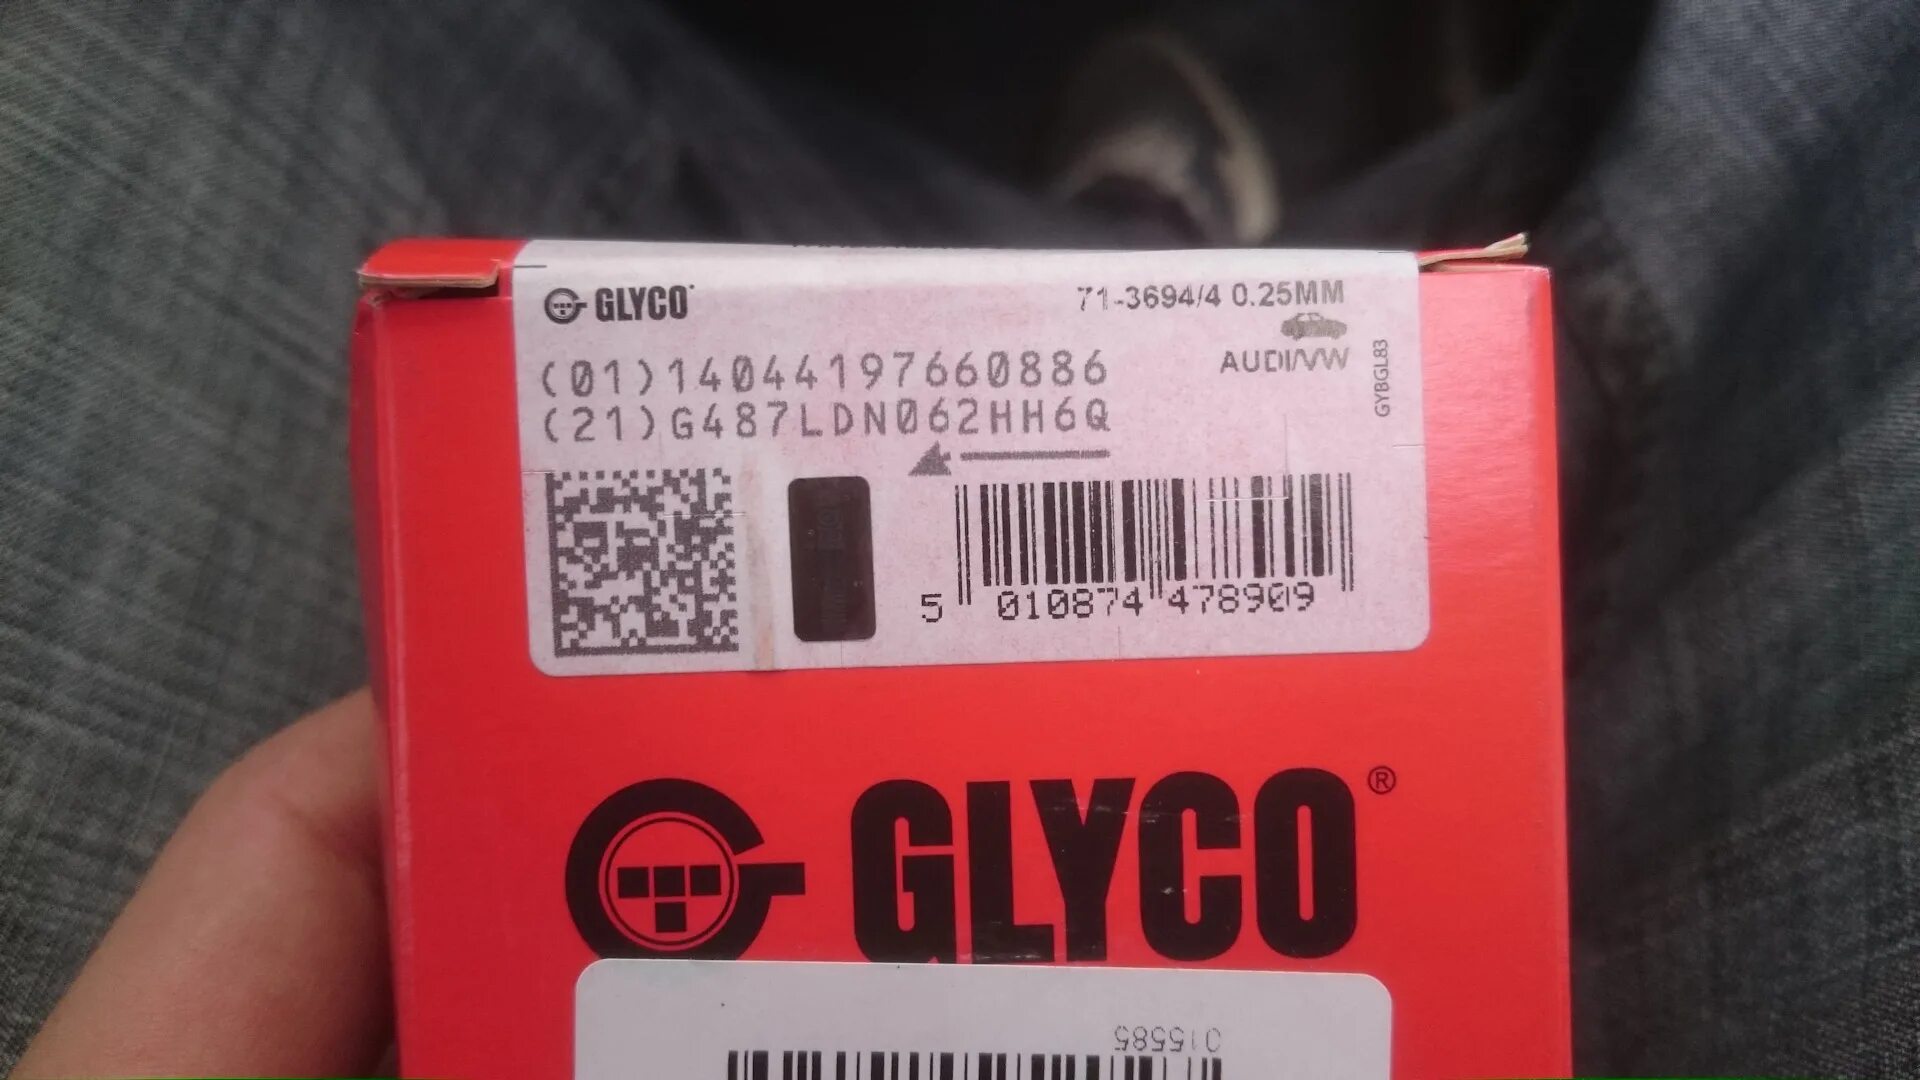 GLYCO 71-3694/4 STD. GLYCO номер: 71-3694/4 STD. 71-3694/4 0.25Mm. 71-4118/4 0.25Mm. 0 25 0 71